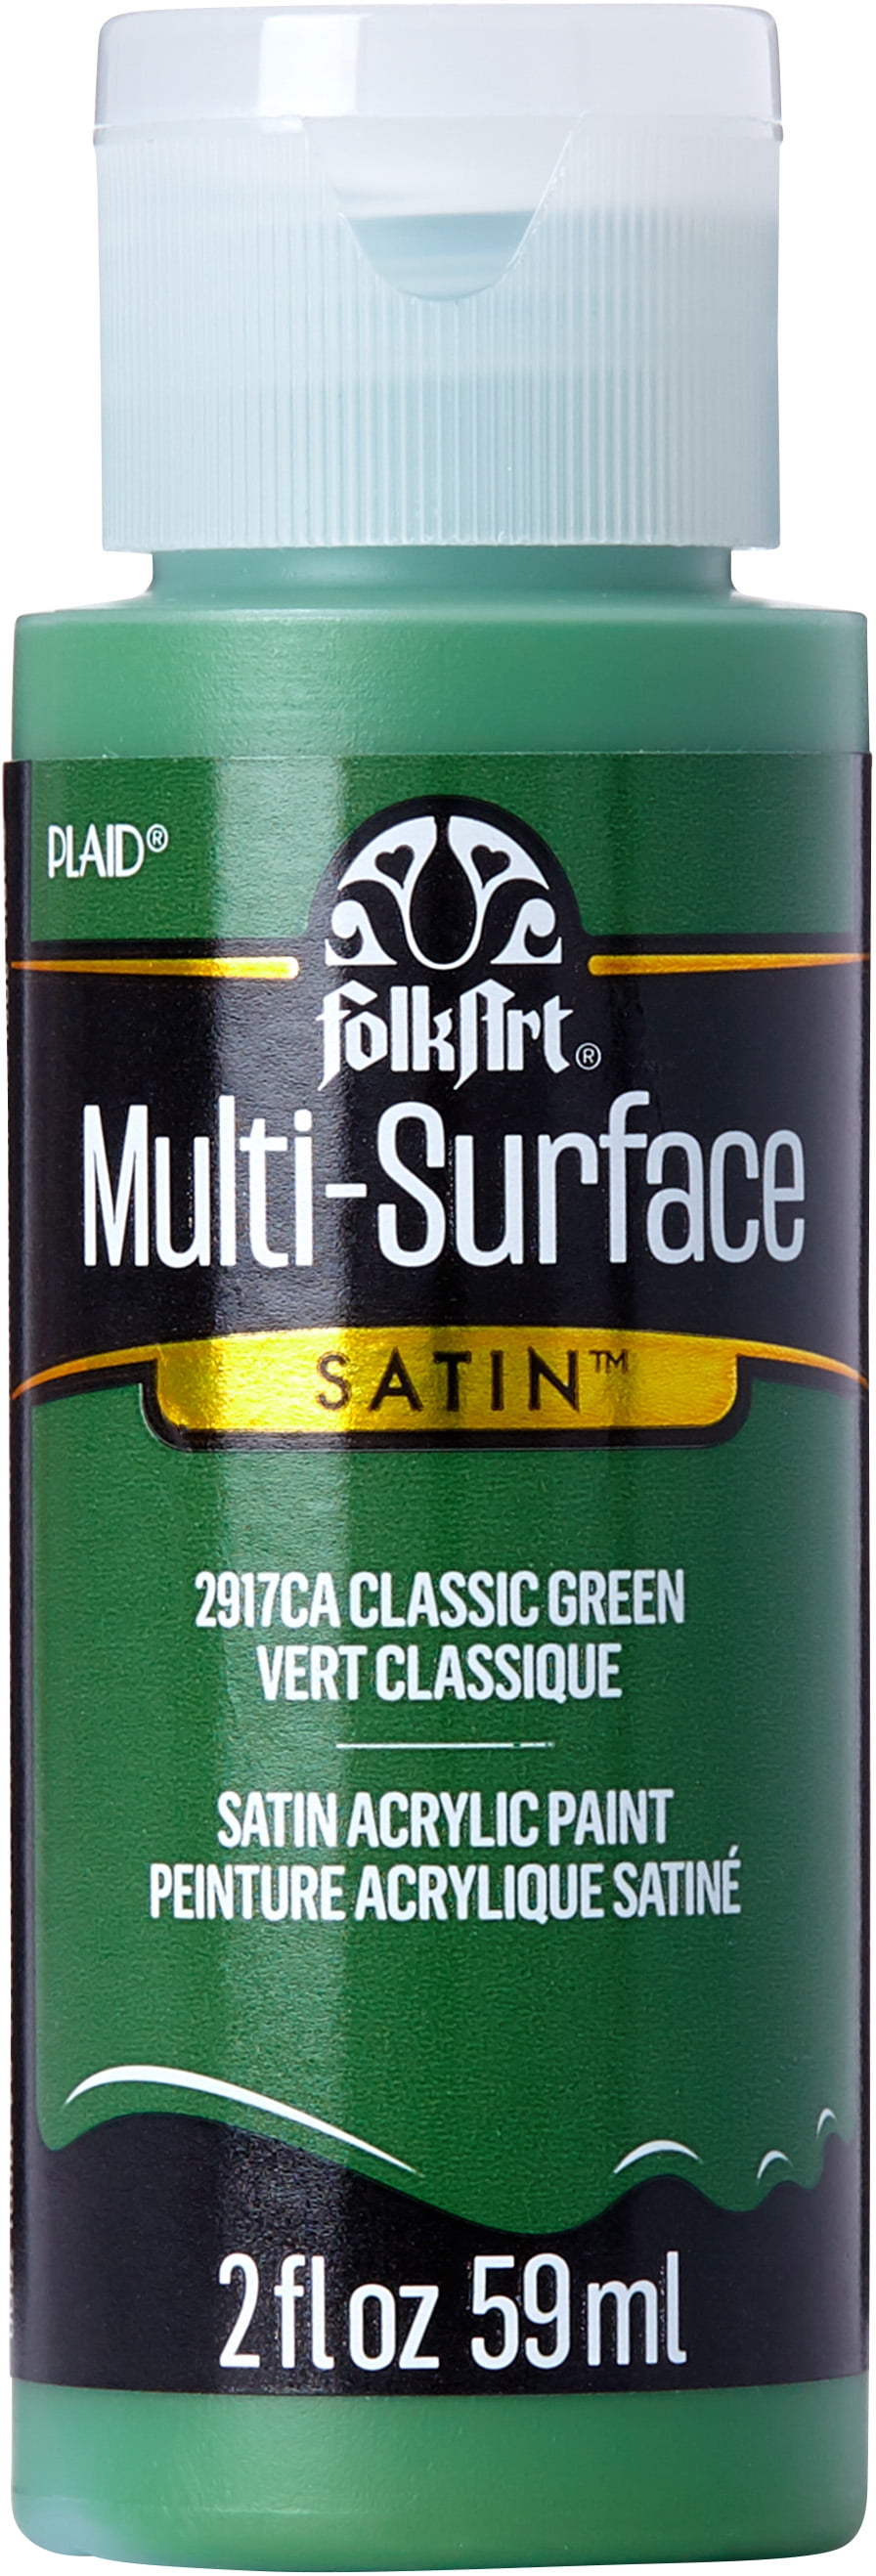 FolkArt Multi-Surface Acrylic Craft Paint, Satin Finish, Classic Green, 2 fl oz